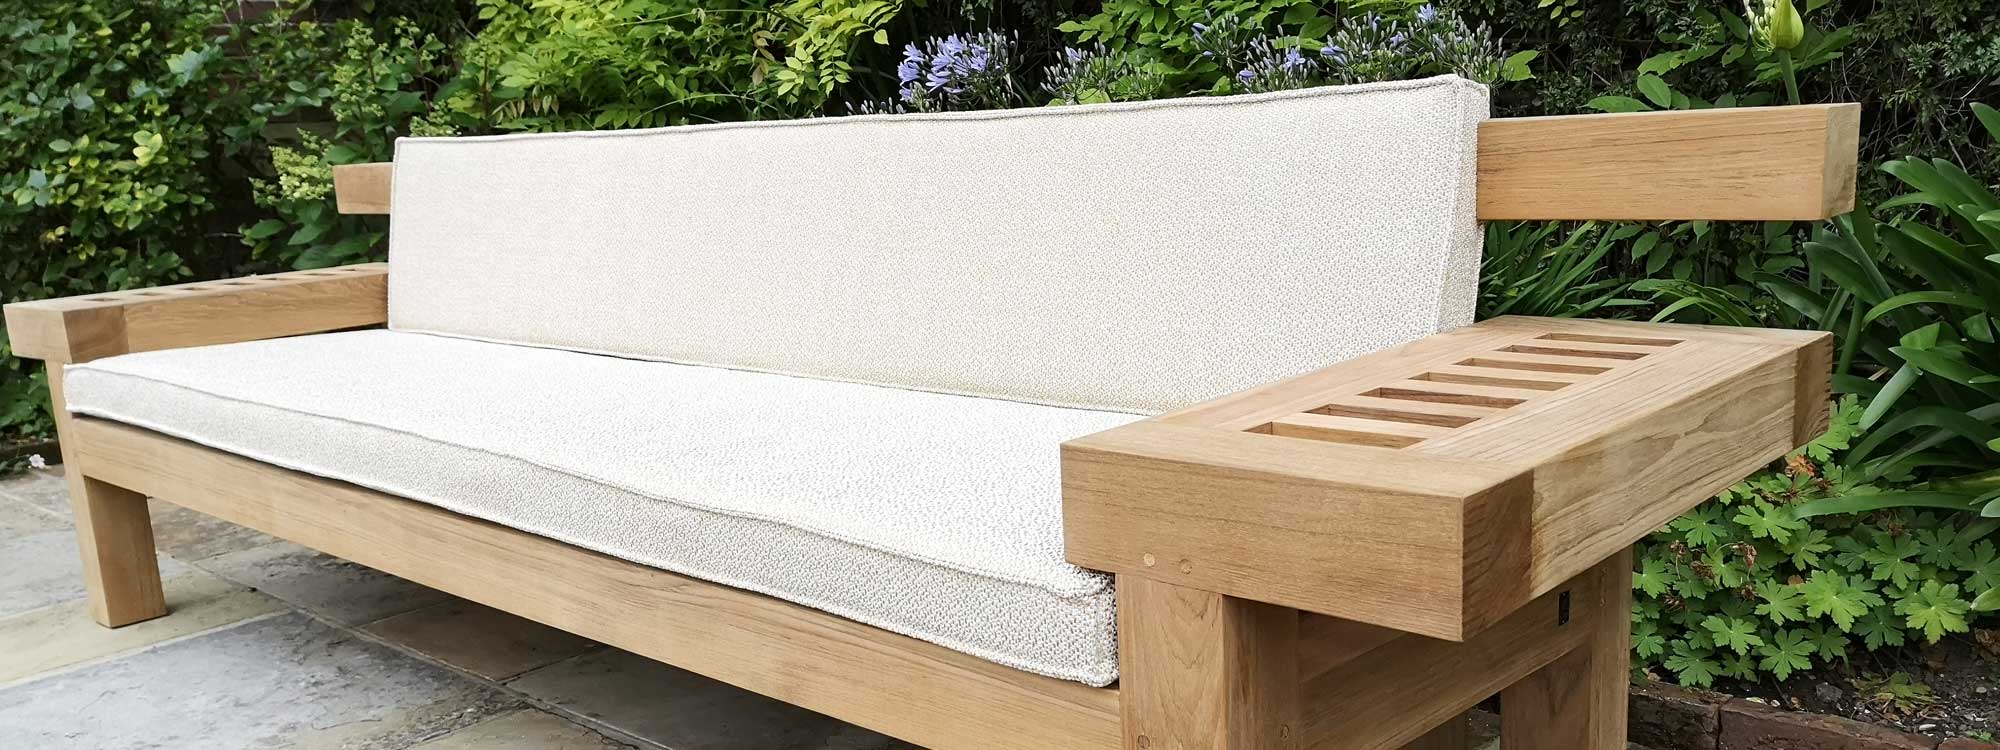 Image of Royal Botania Nara teak garden bench with back and seat cushions